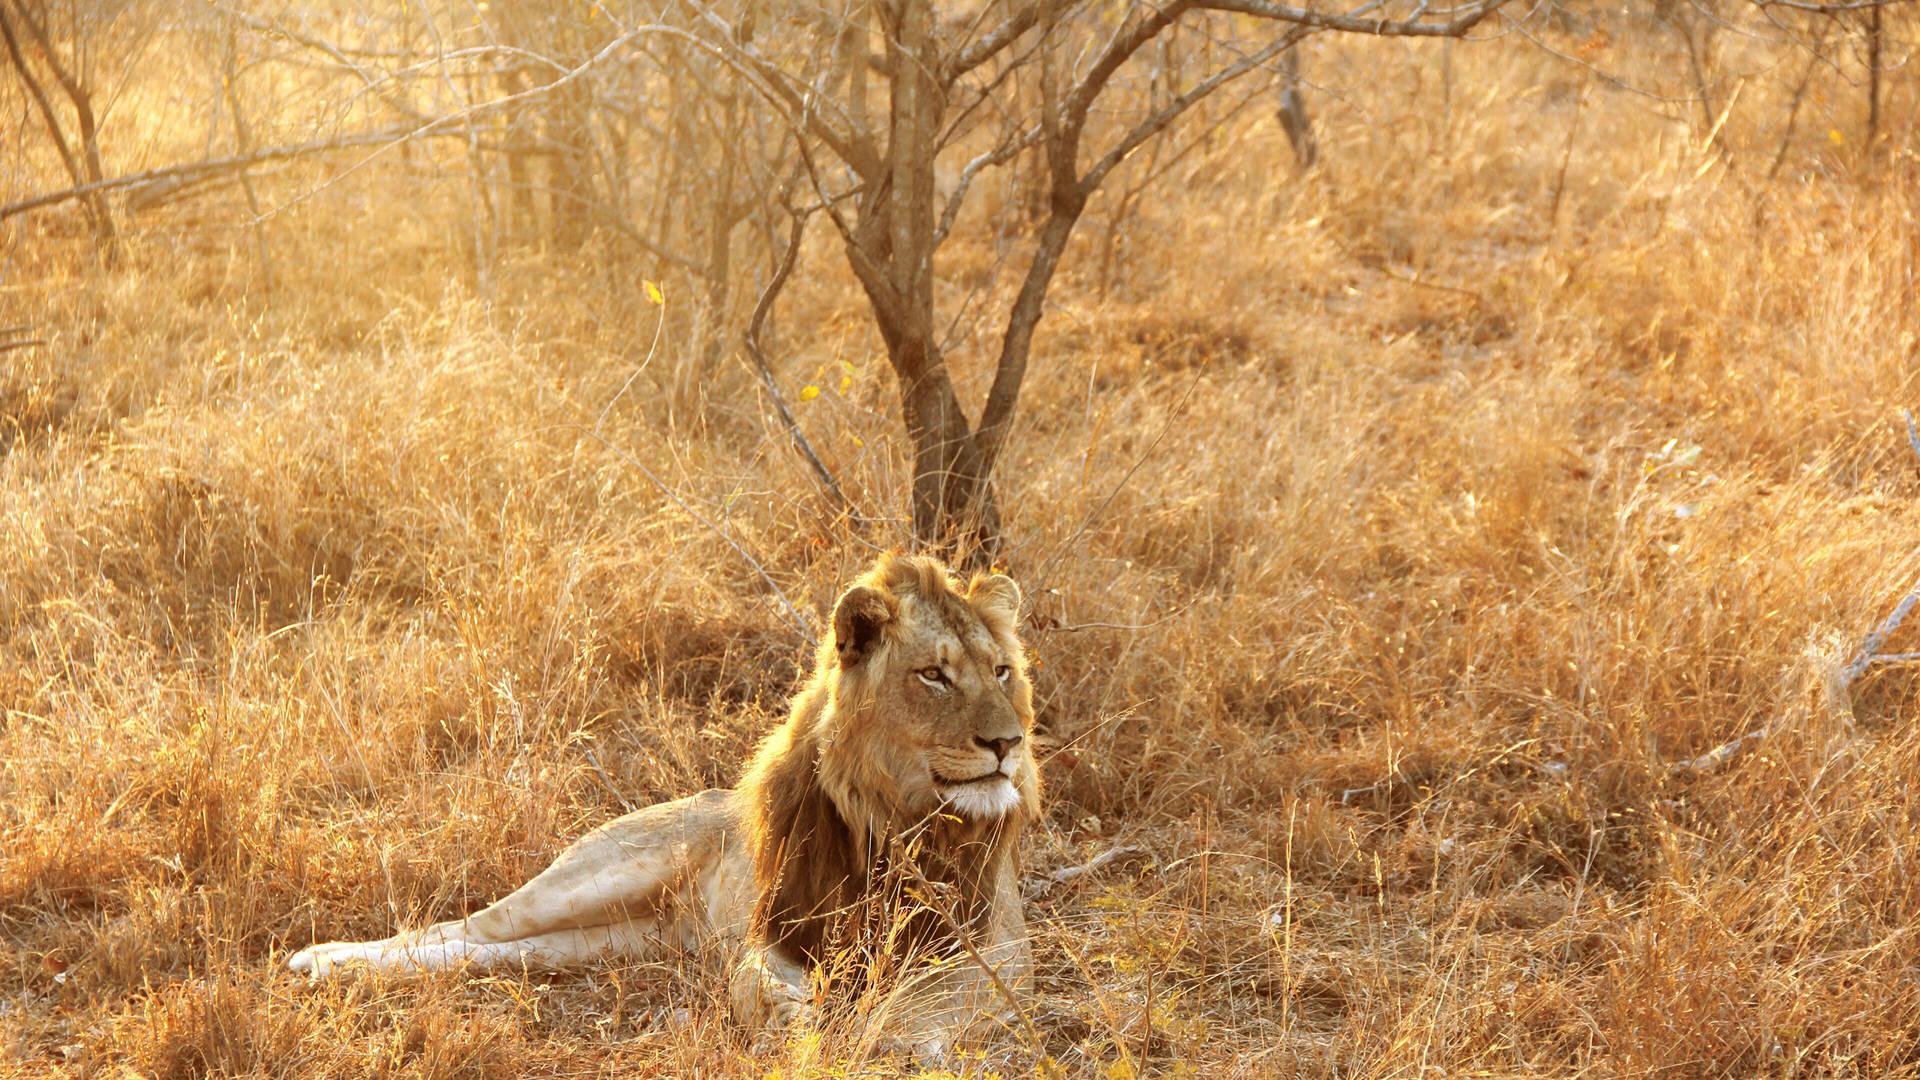 Resting Lion In Africa 4k